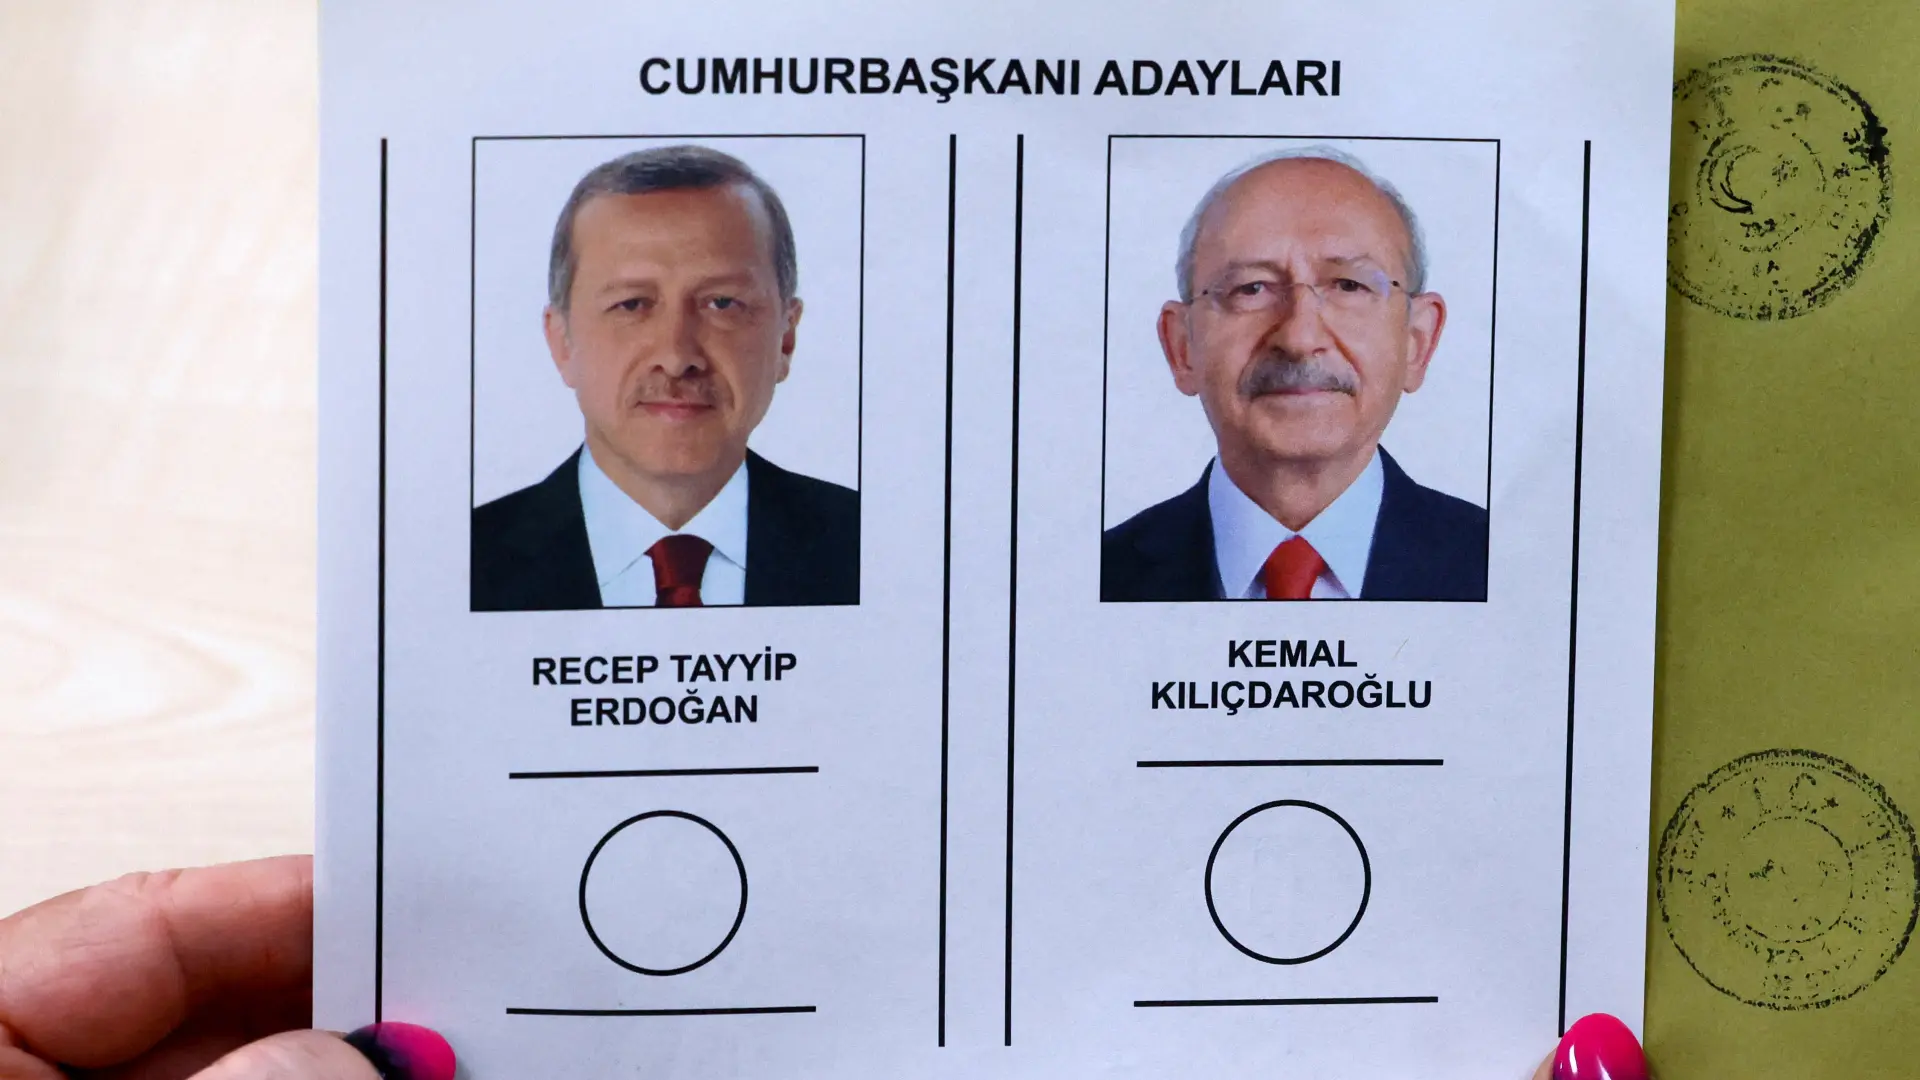 erdogan kiličdaroglu izbori turska reuters-6472f77de5539.webp